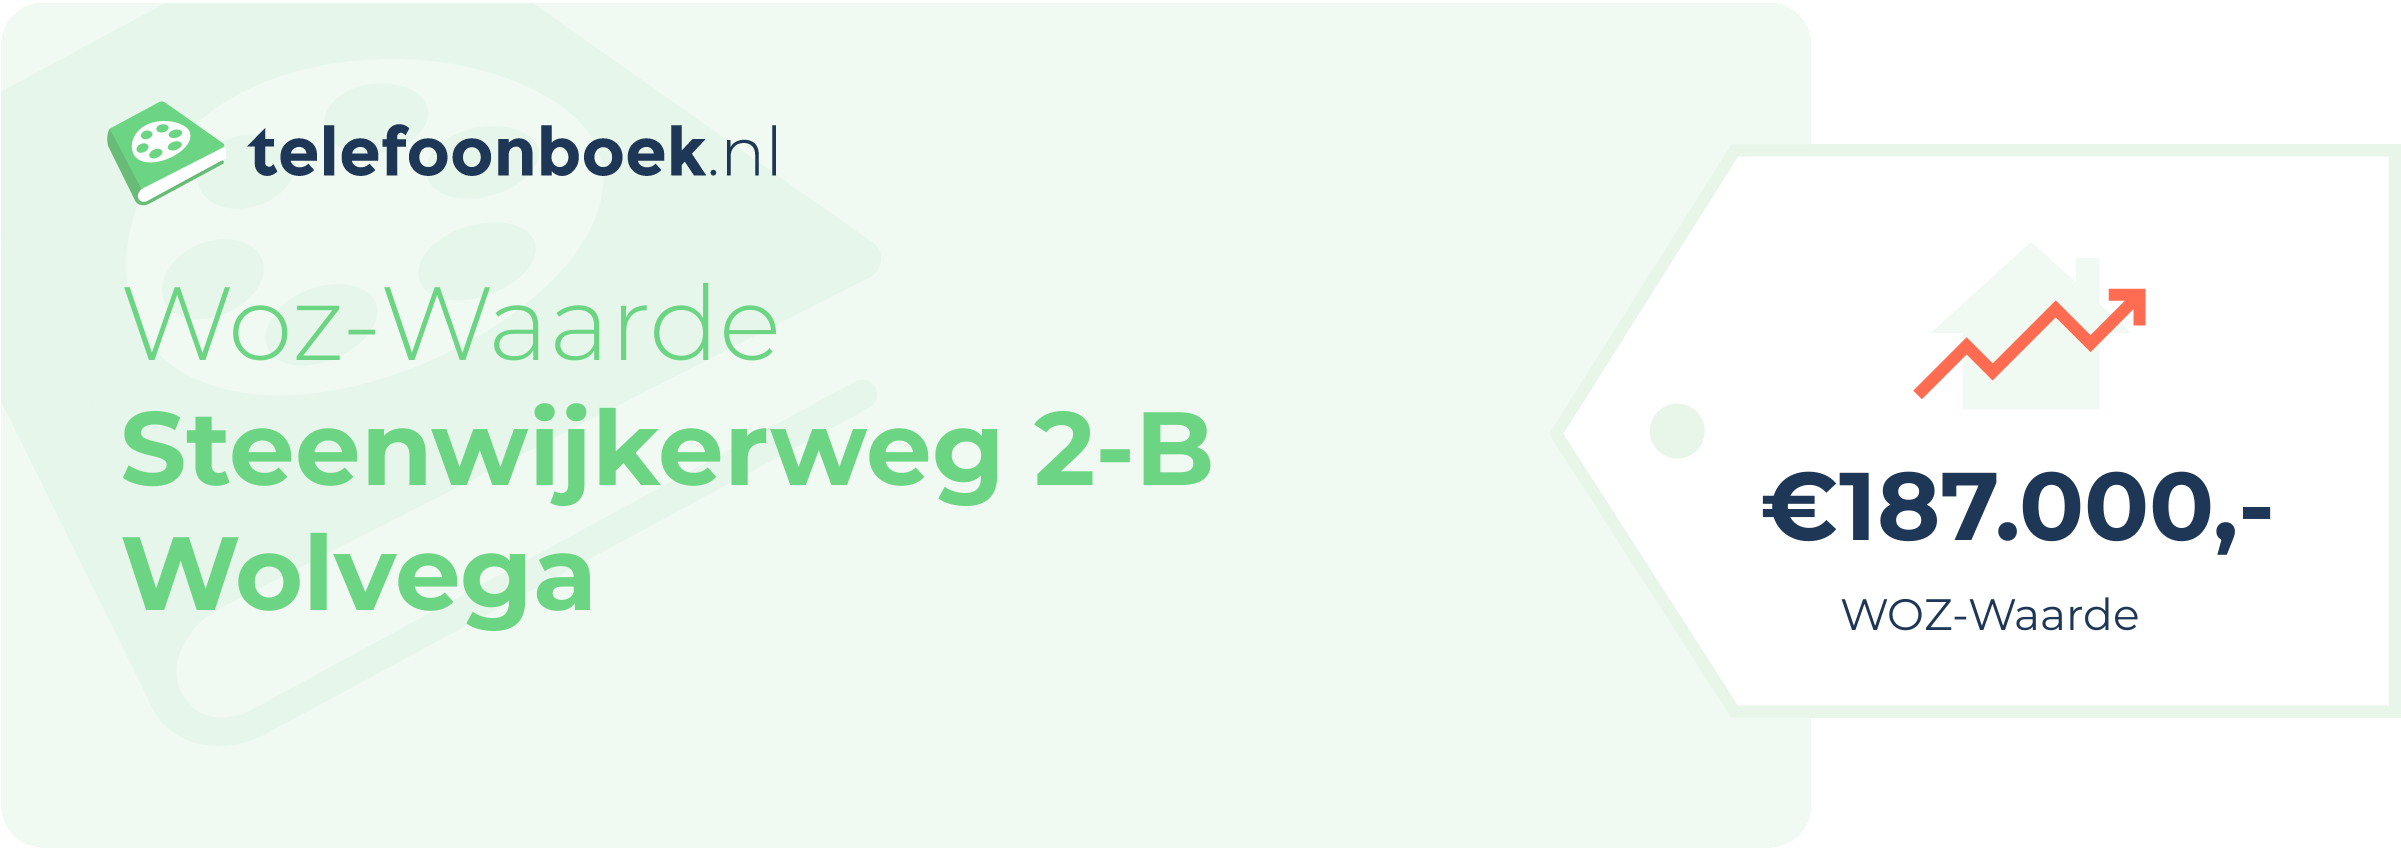 WOZ-waarde Steenwijkerweg 2-B Wolvega